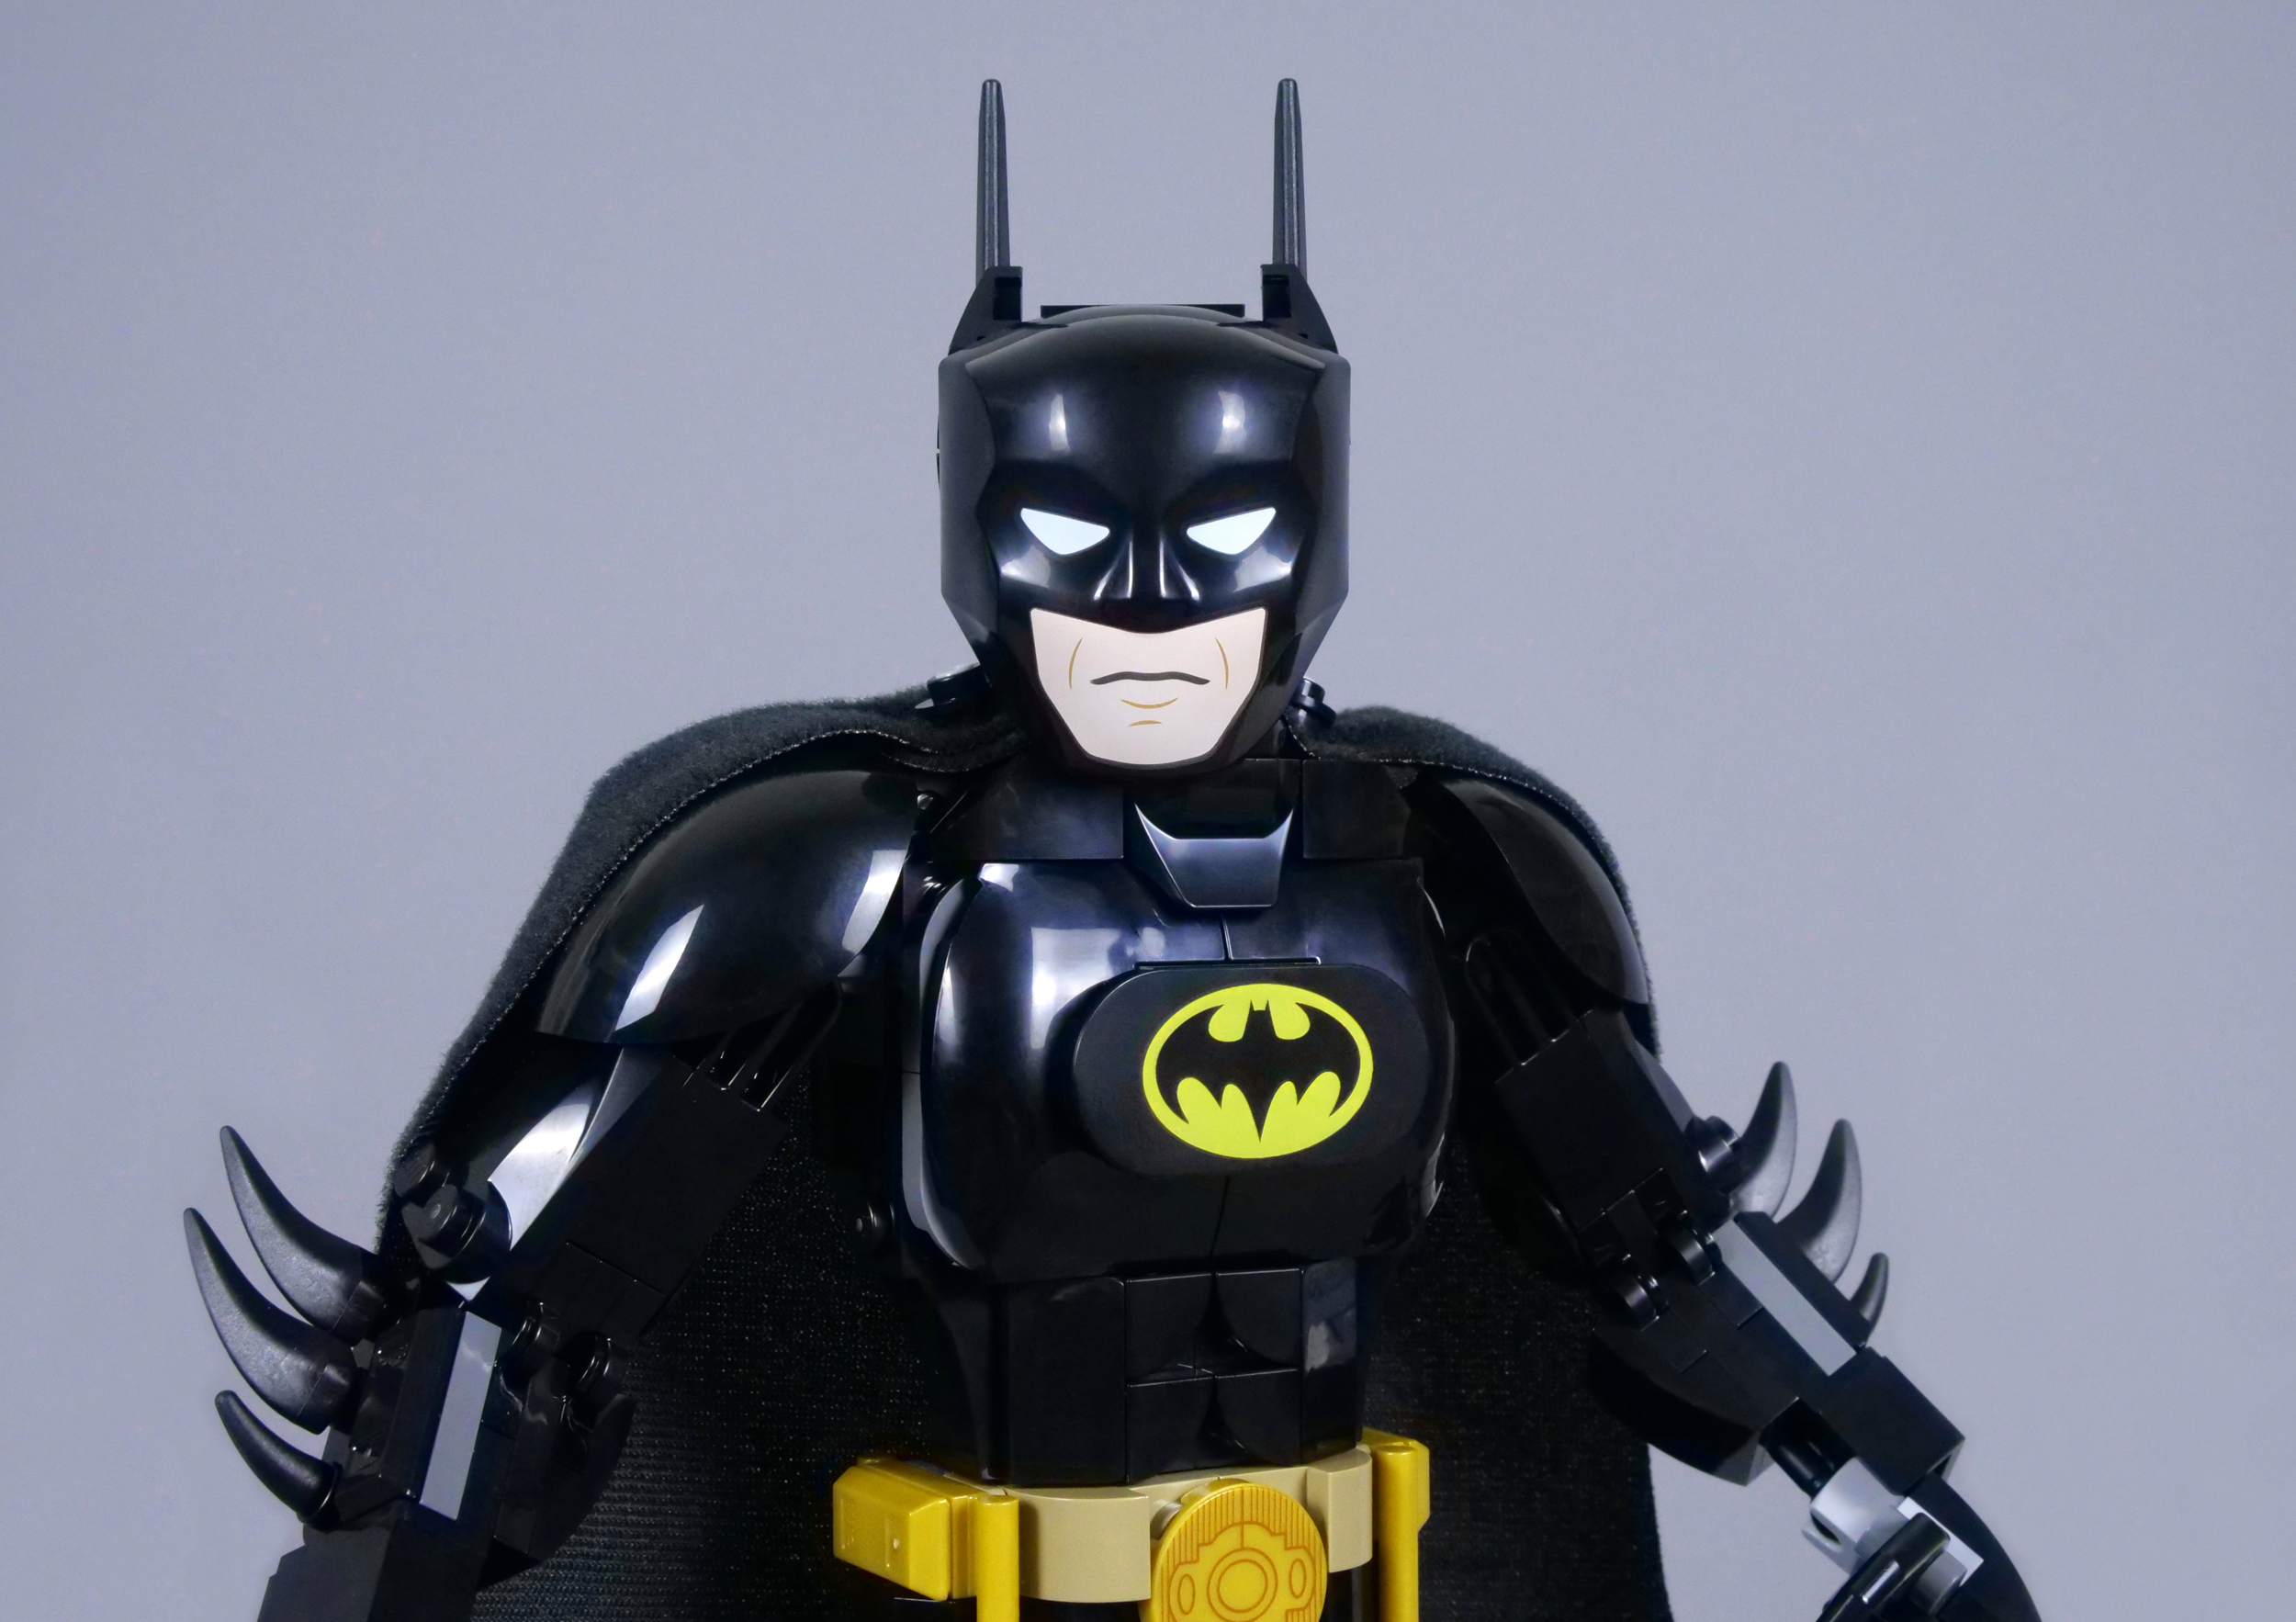 LEGO Batman The Dark Knight Edition Minifigure